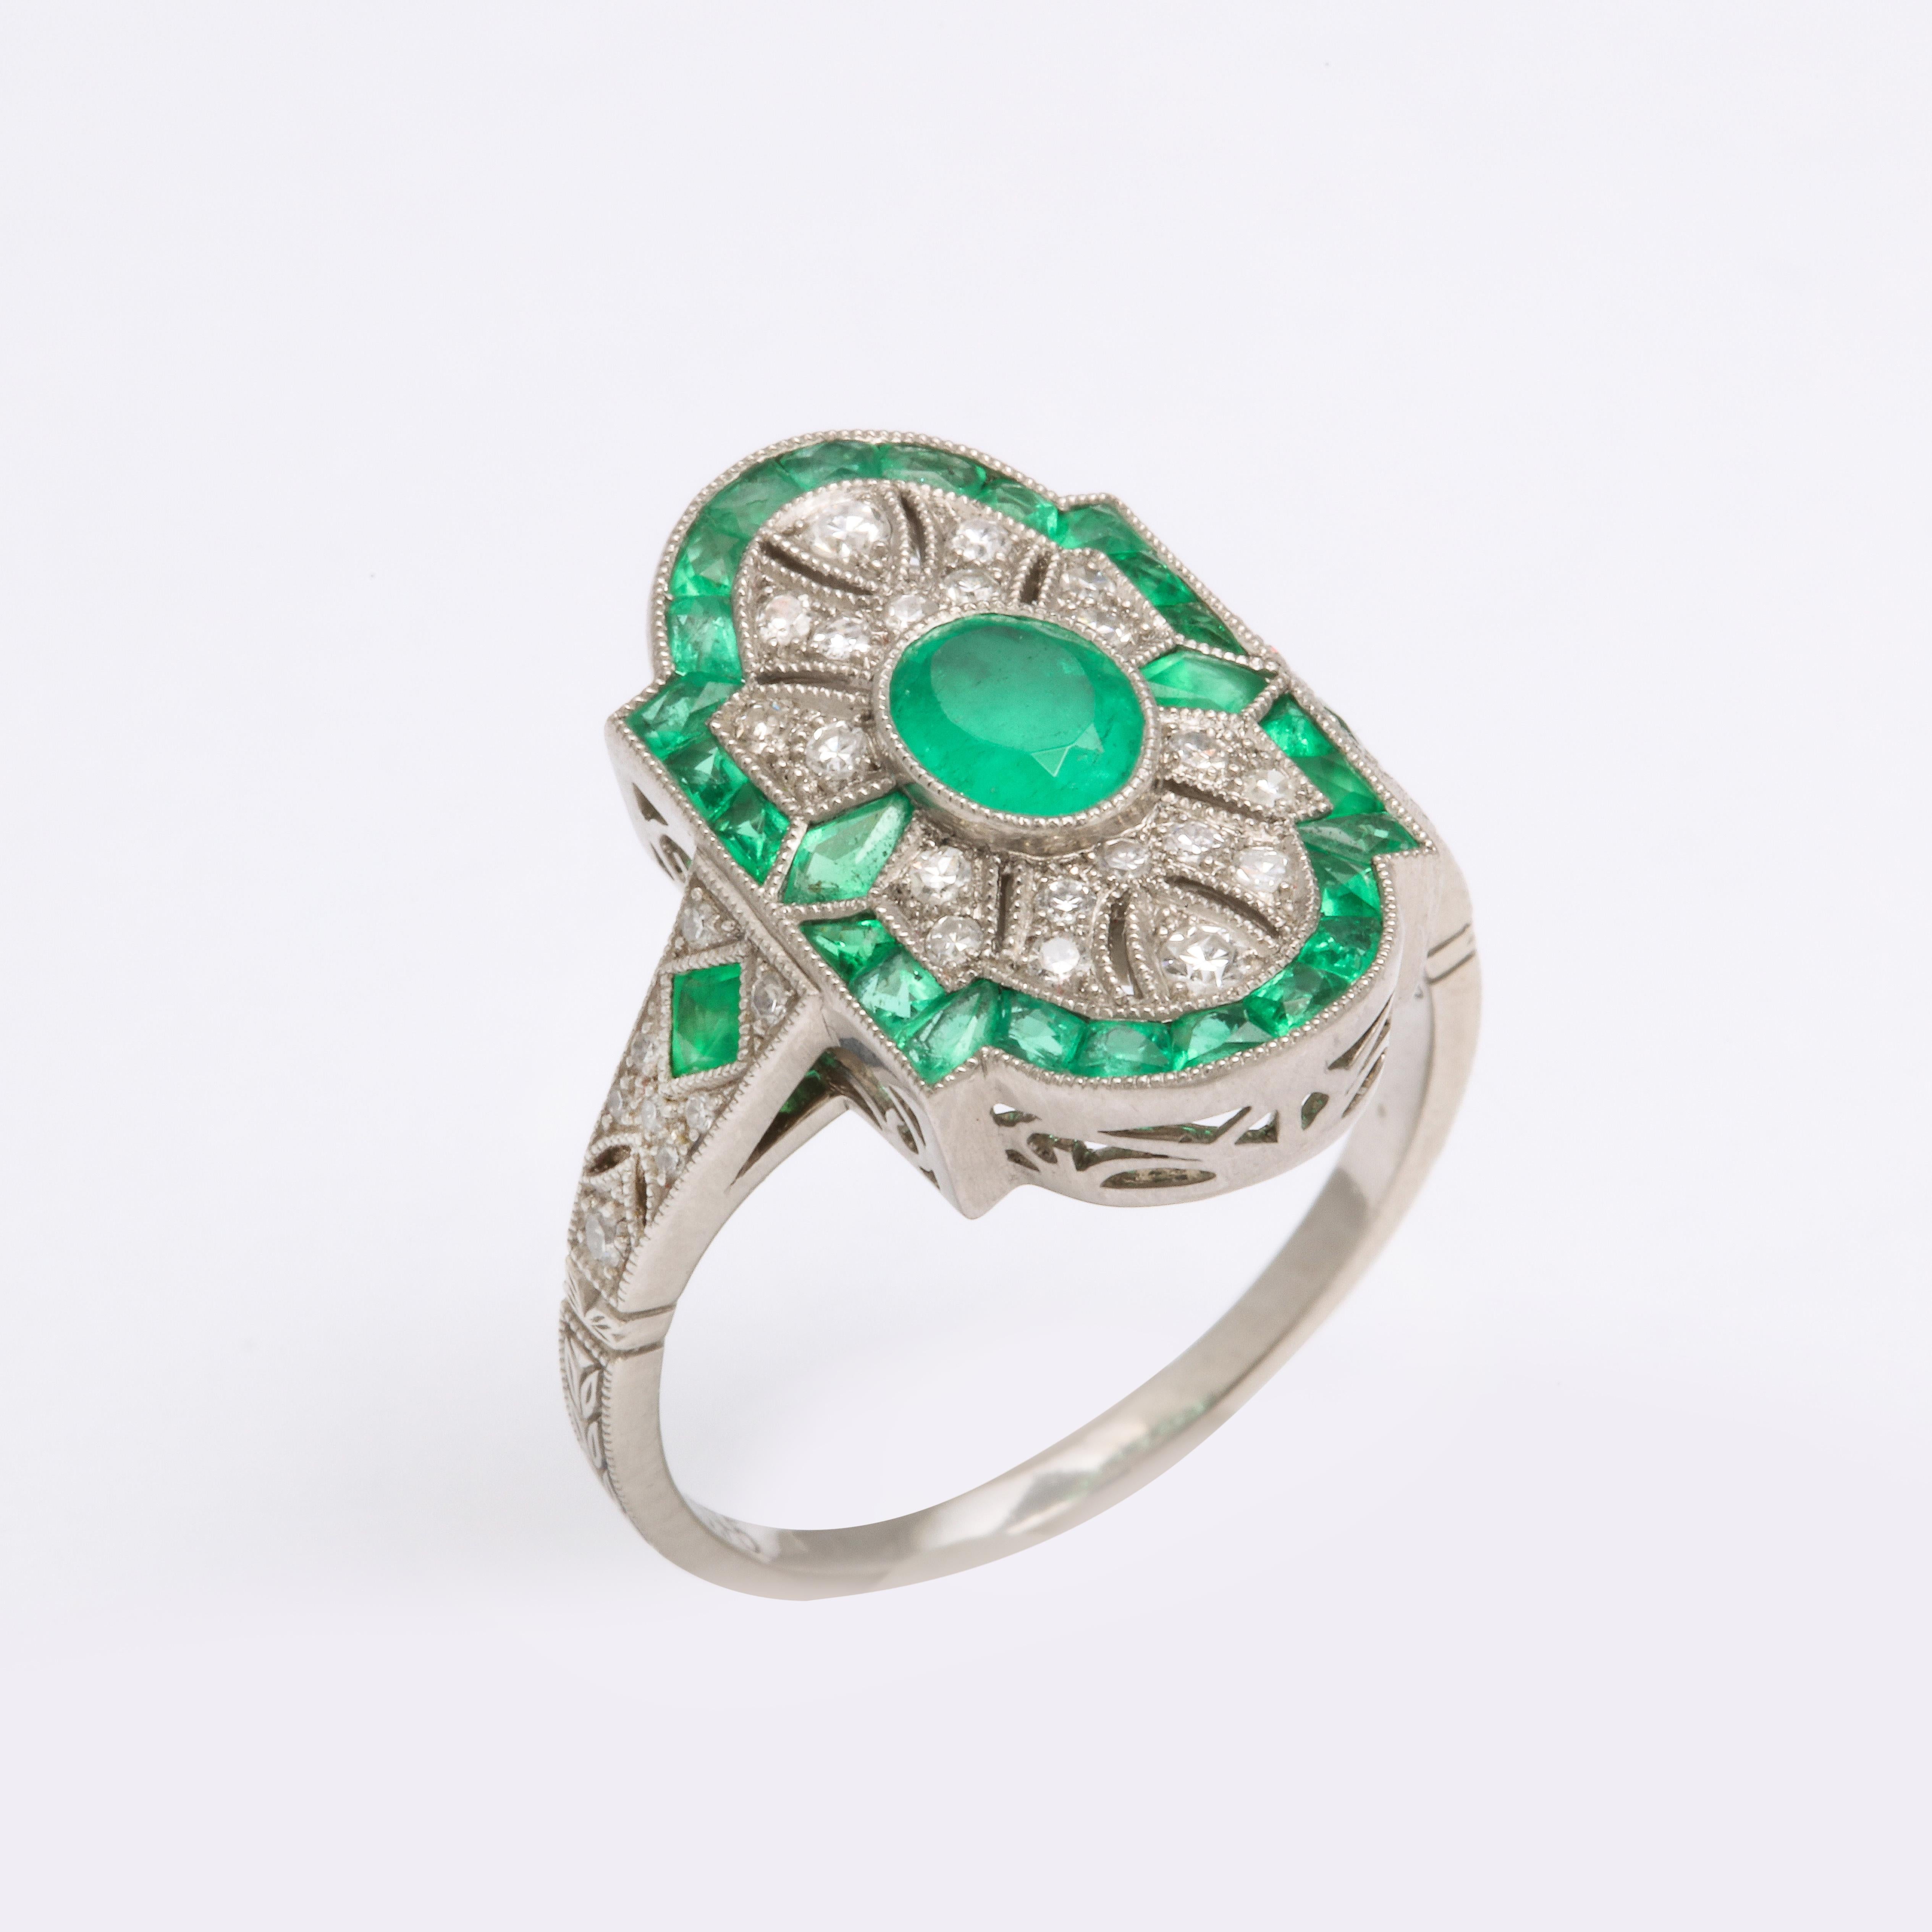 Mixed Cut Art Deco Platinum Style Emerald and Diamond Ring